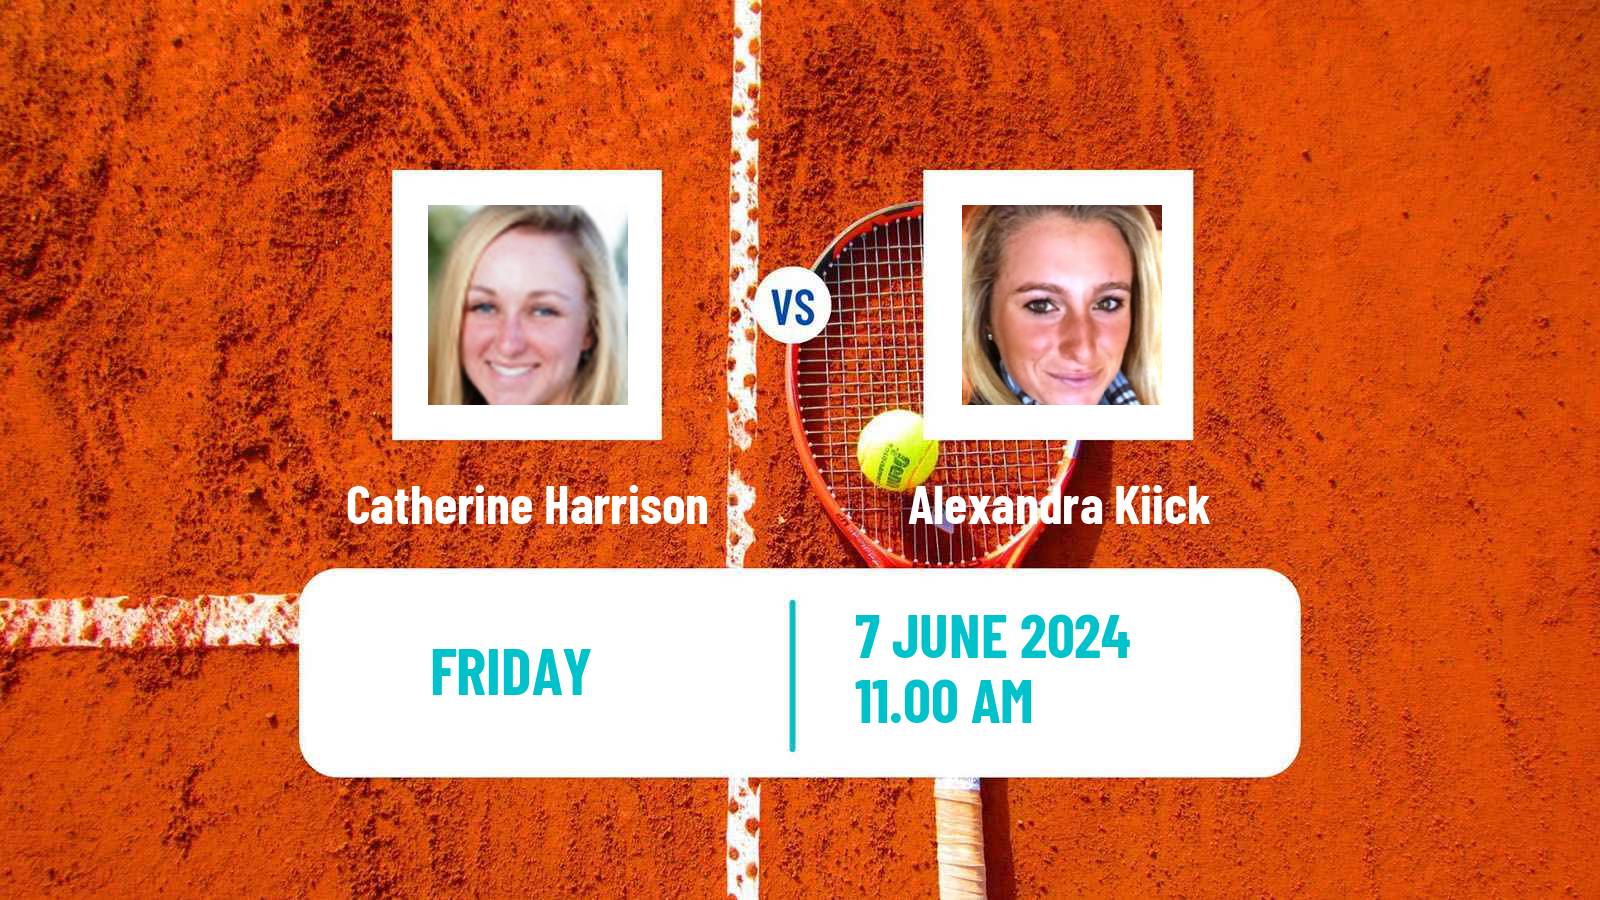 Tennis ITF W75 Sumter Sc Women Catherine Harrison - Alexandra Kiick